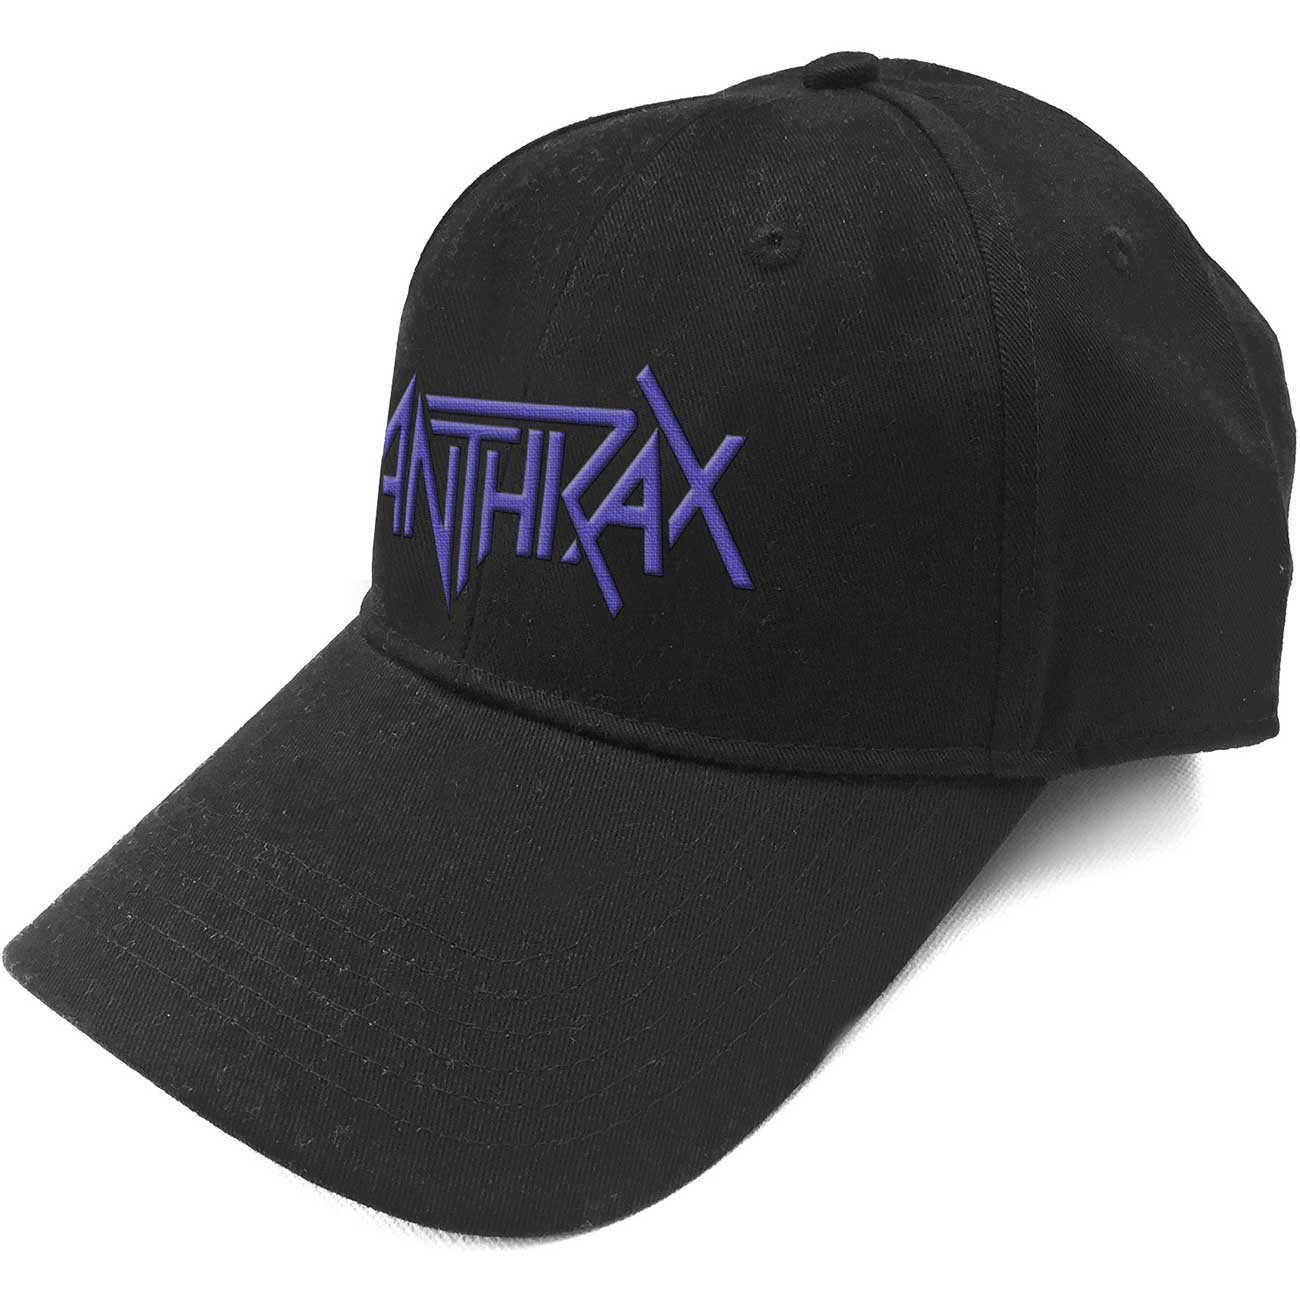 Anthrax "Logo" Baseball Cap